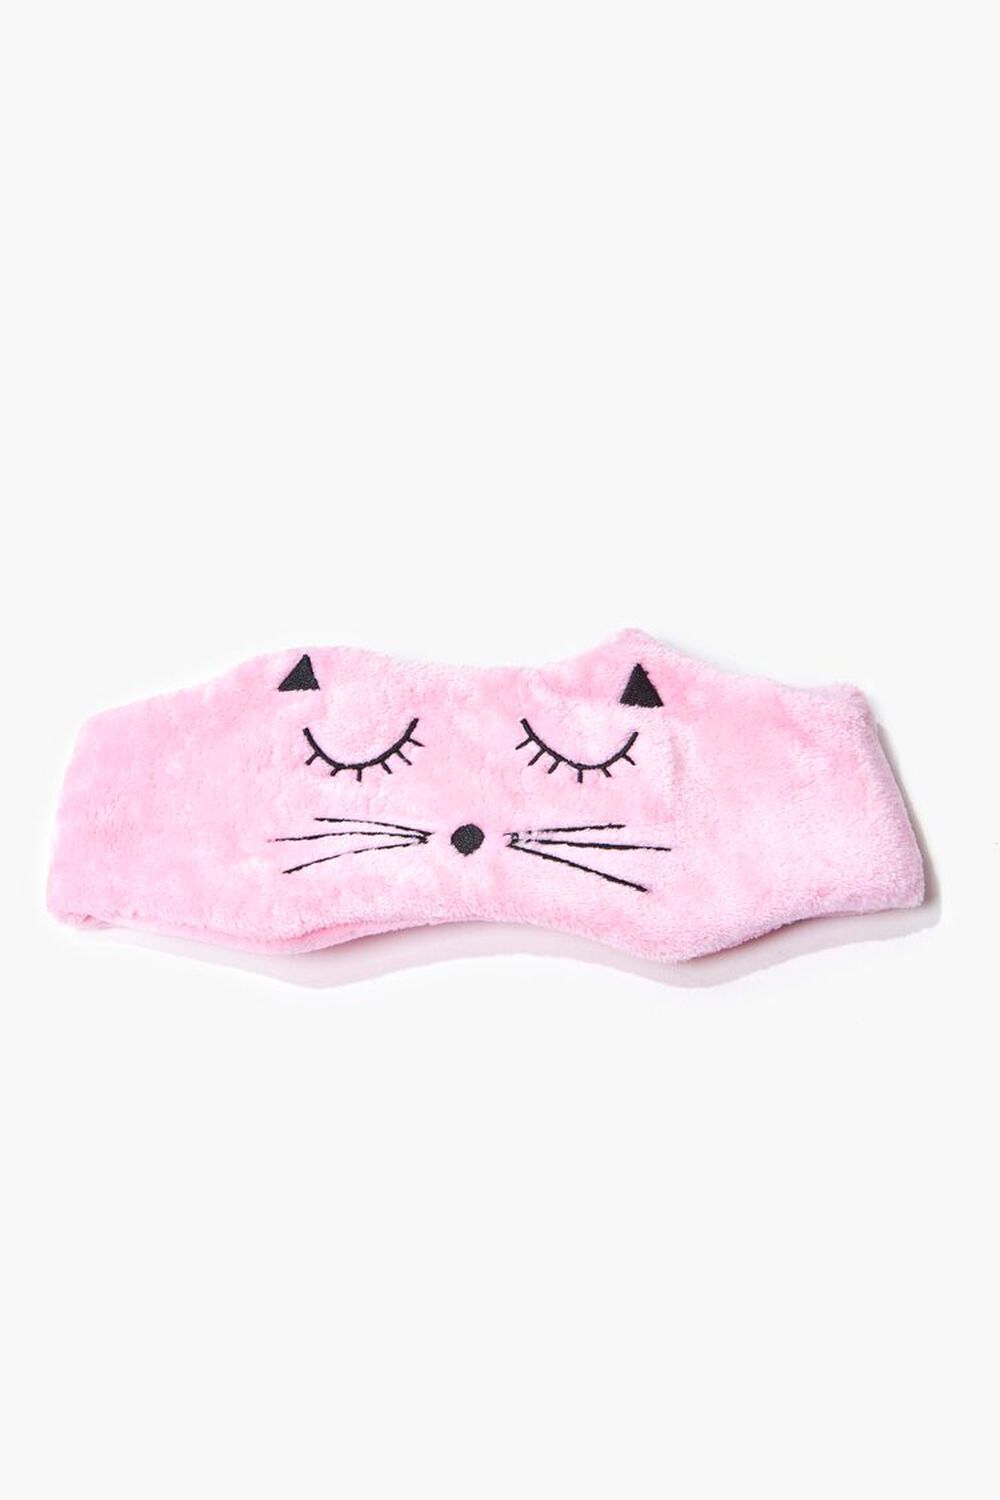 PINK Plush Cat Graphic Headwrap, image 1